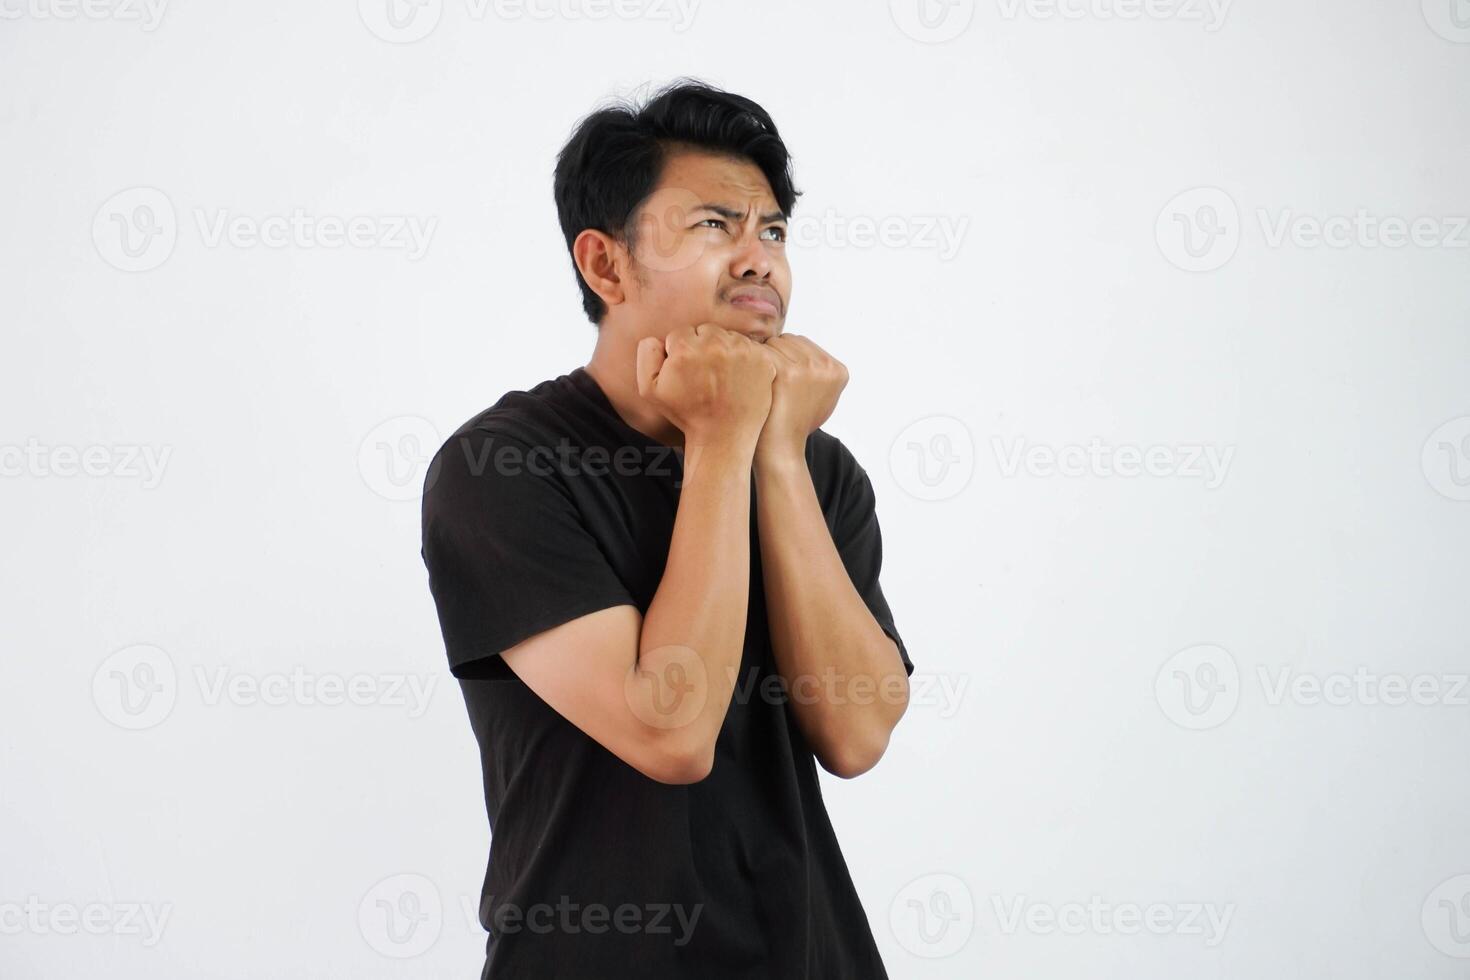 scared young Asian man black t shirt gesture afraid something isolated on white background photo